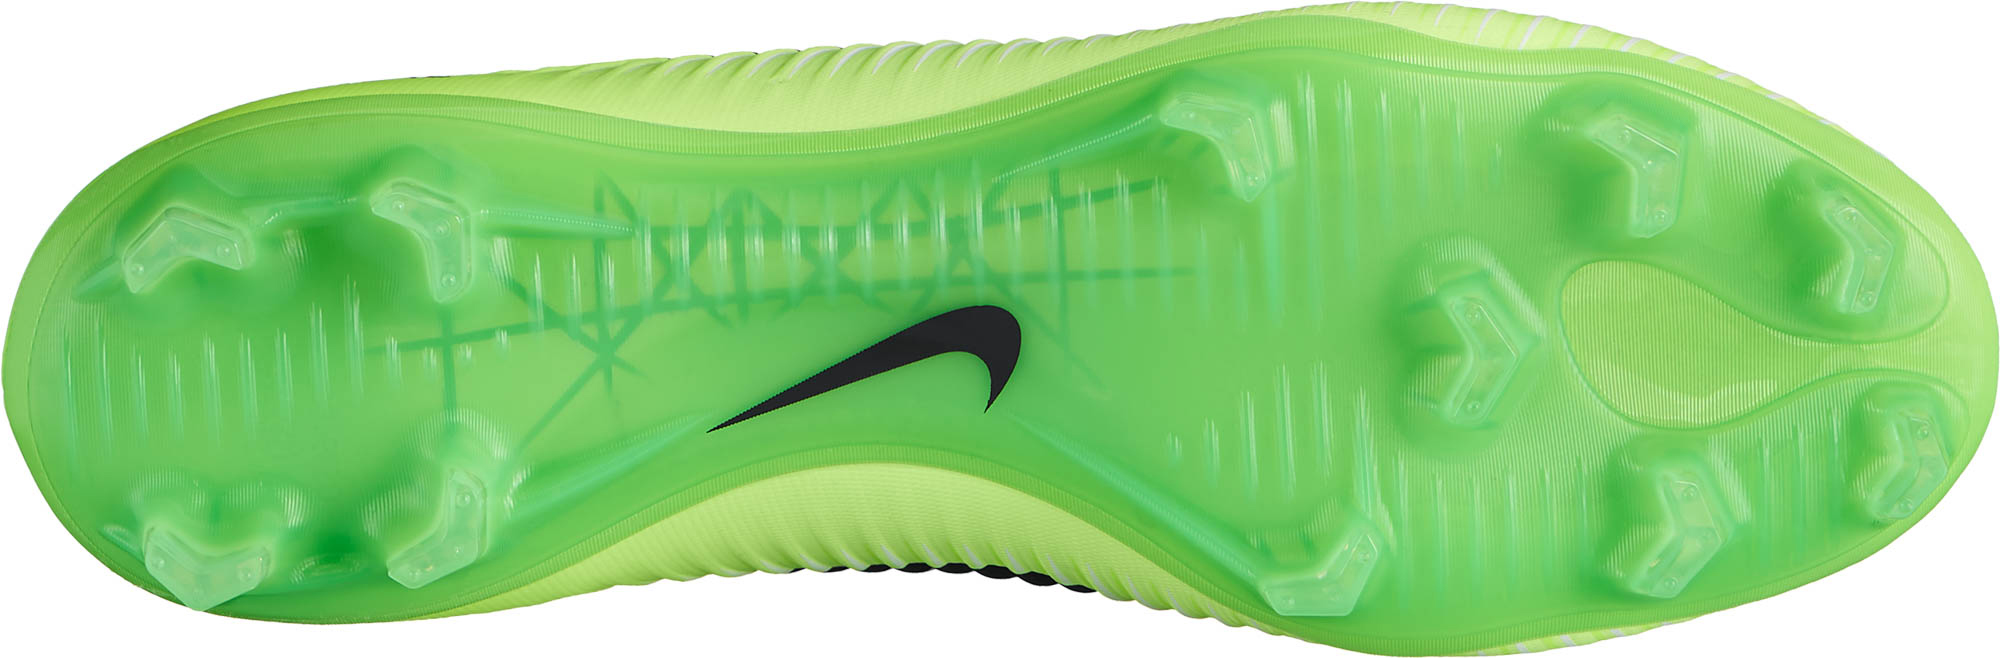 Nike Mercurial Vapor XI FG Cleats Electric Green & Flash Lime - Soccer Master